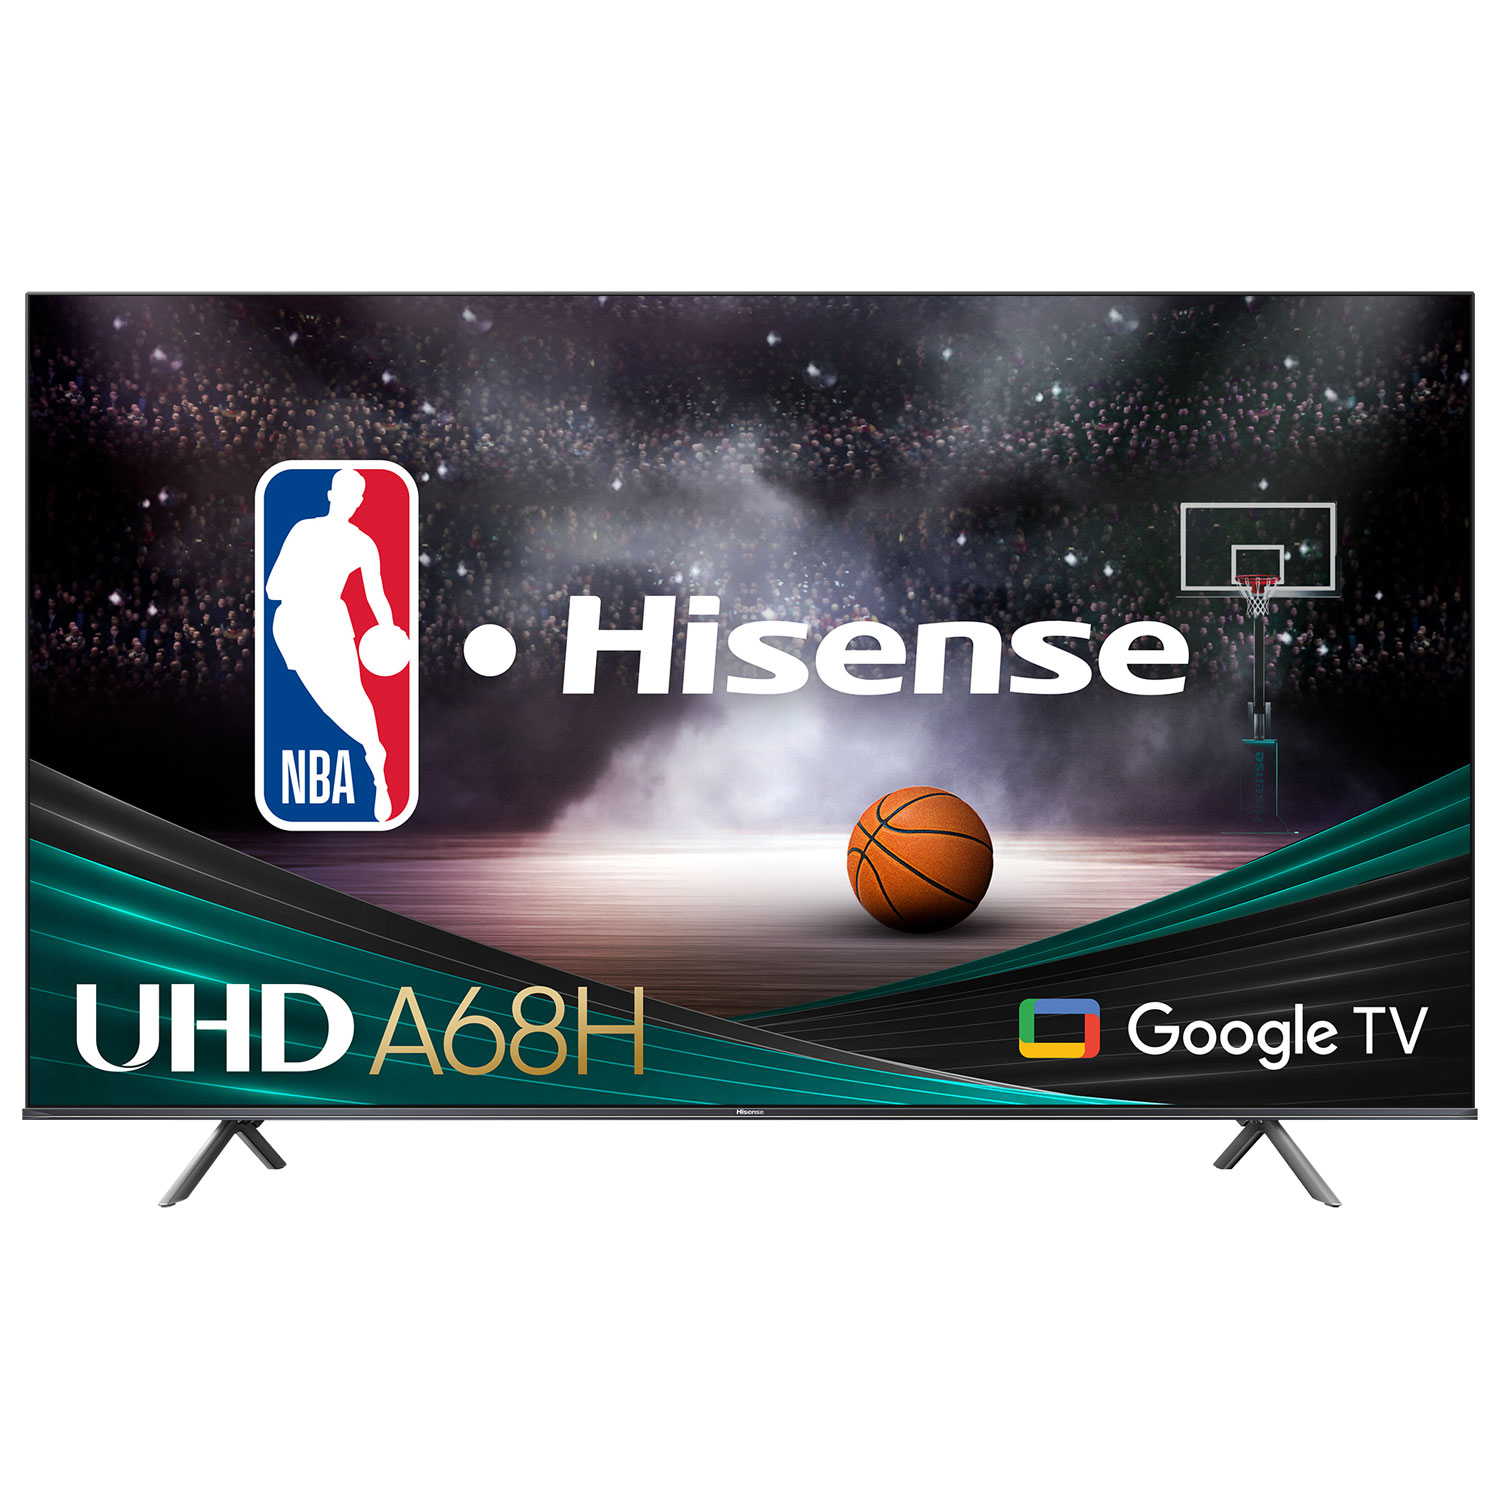 Hisense A68H 85" 4K UHD HDR LCD Smart Google TV (85A68H) - 2022